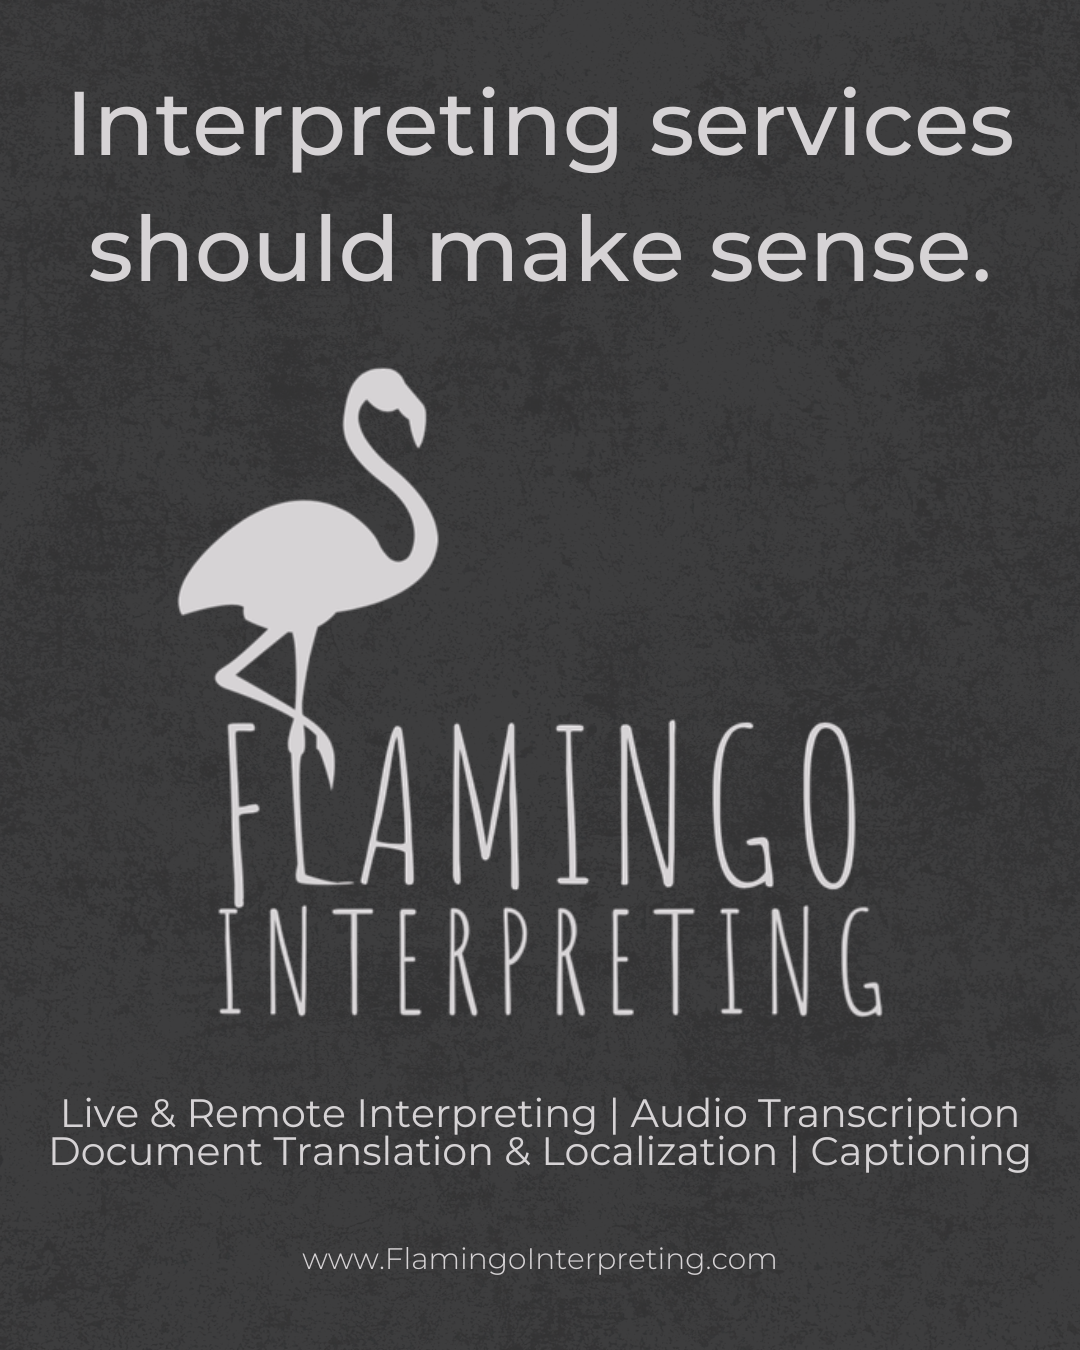 Flamingo Interpreting Ad